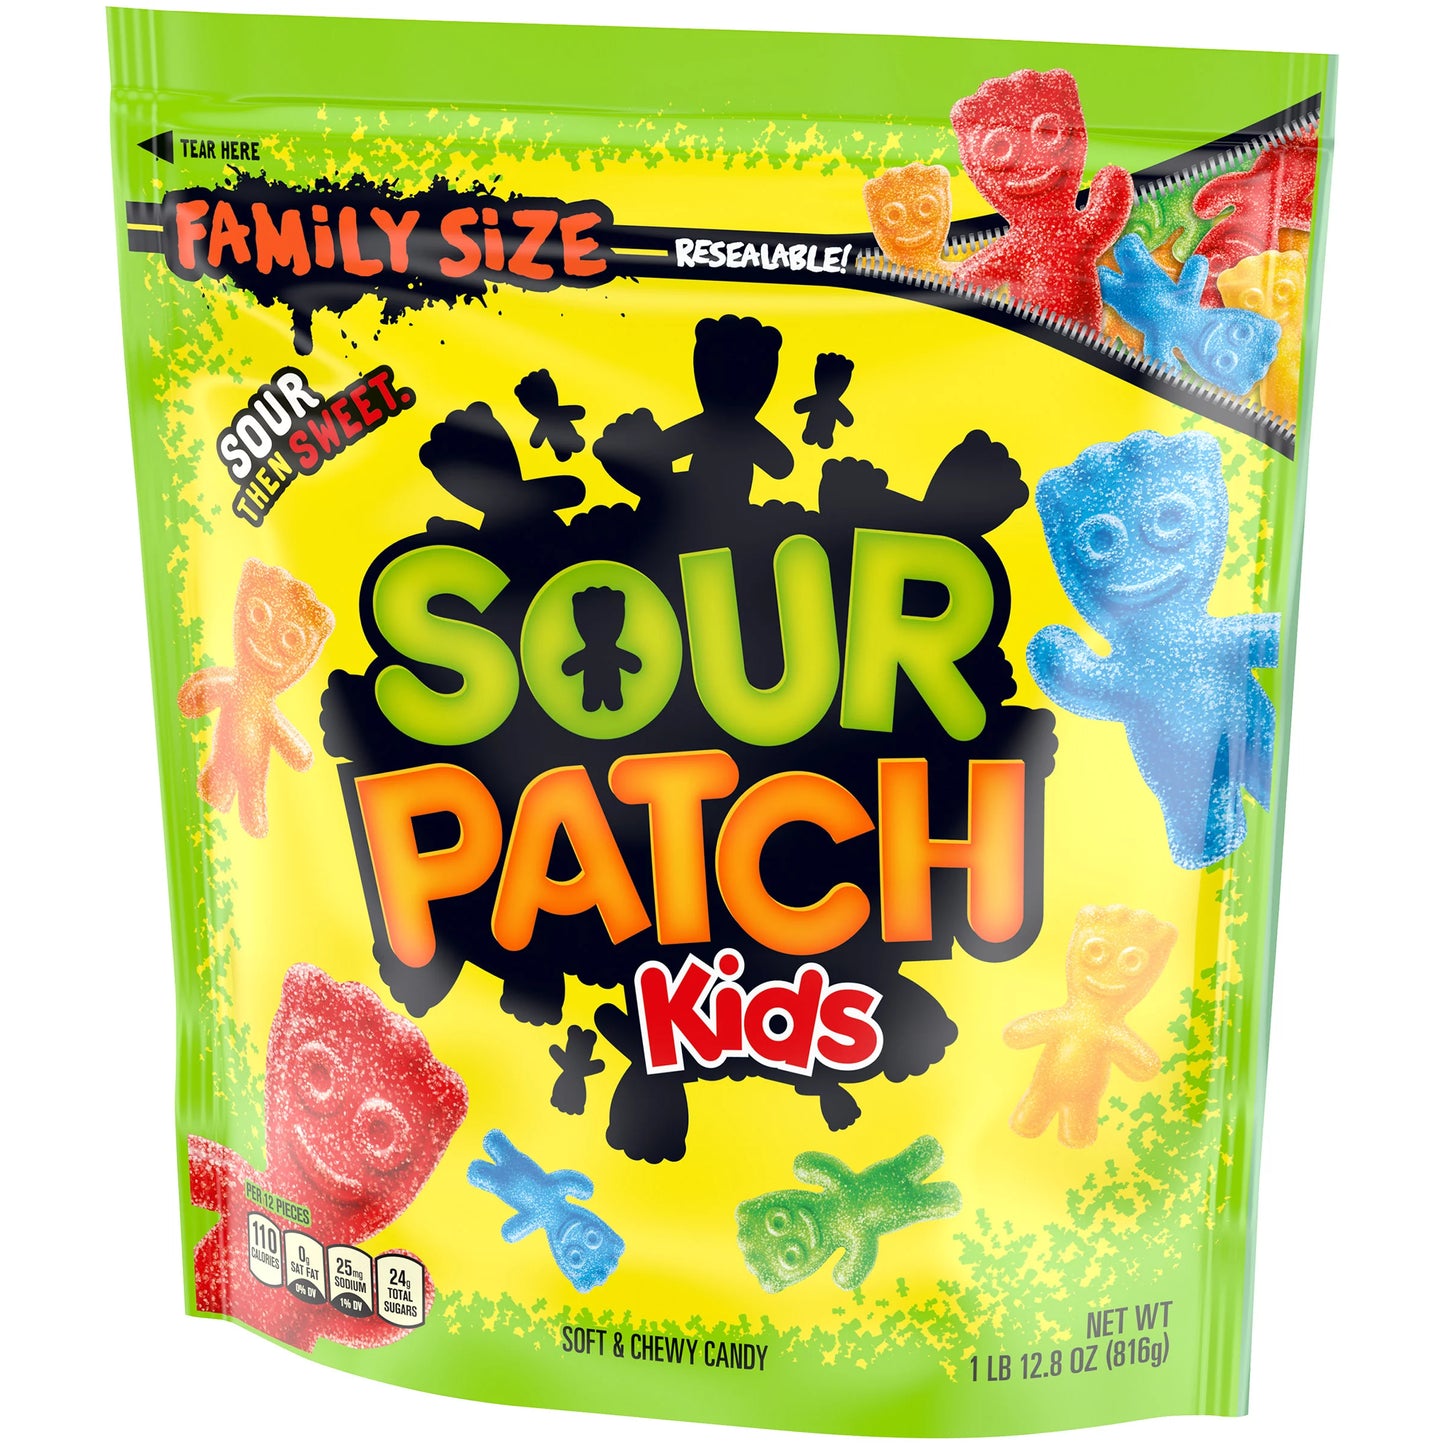 Sour Patch Kids - Family Size